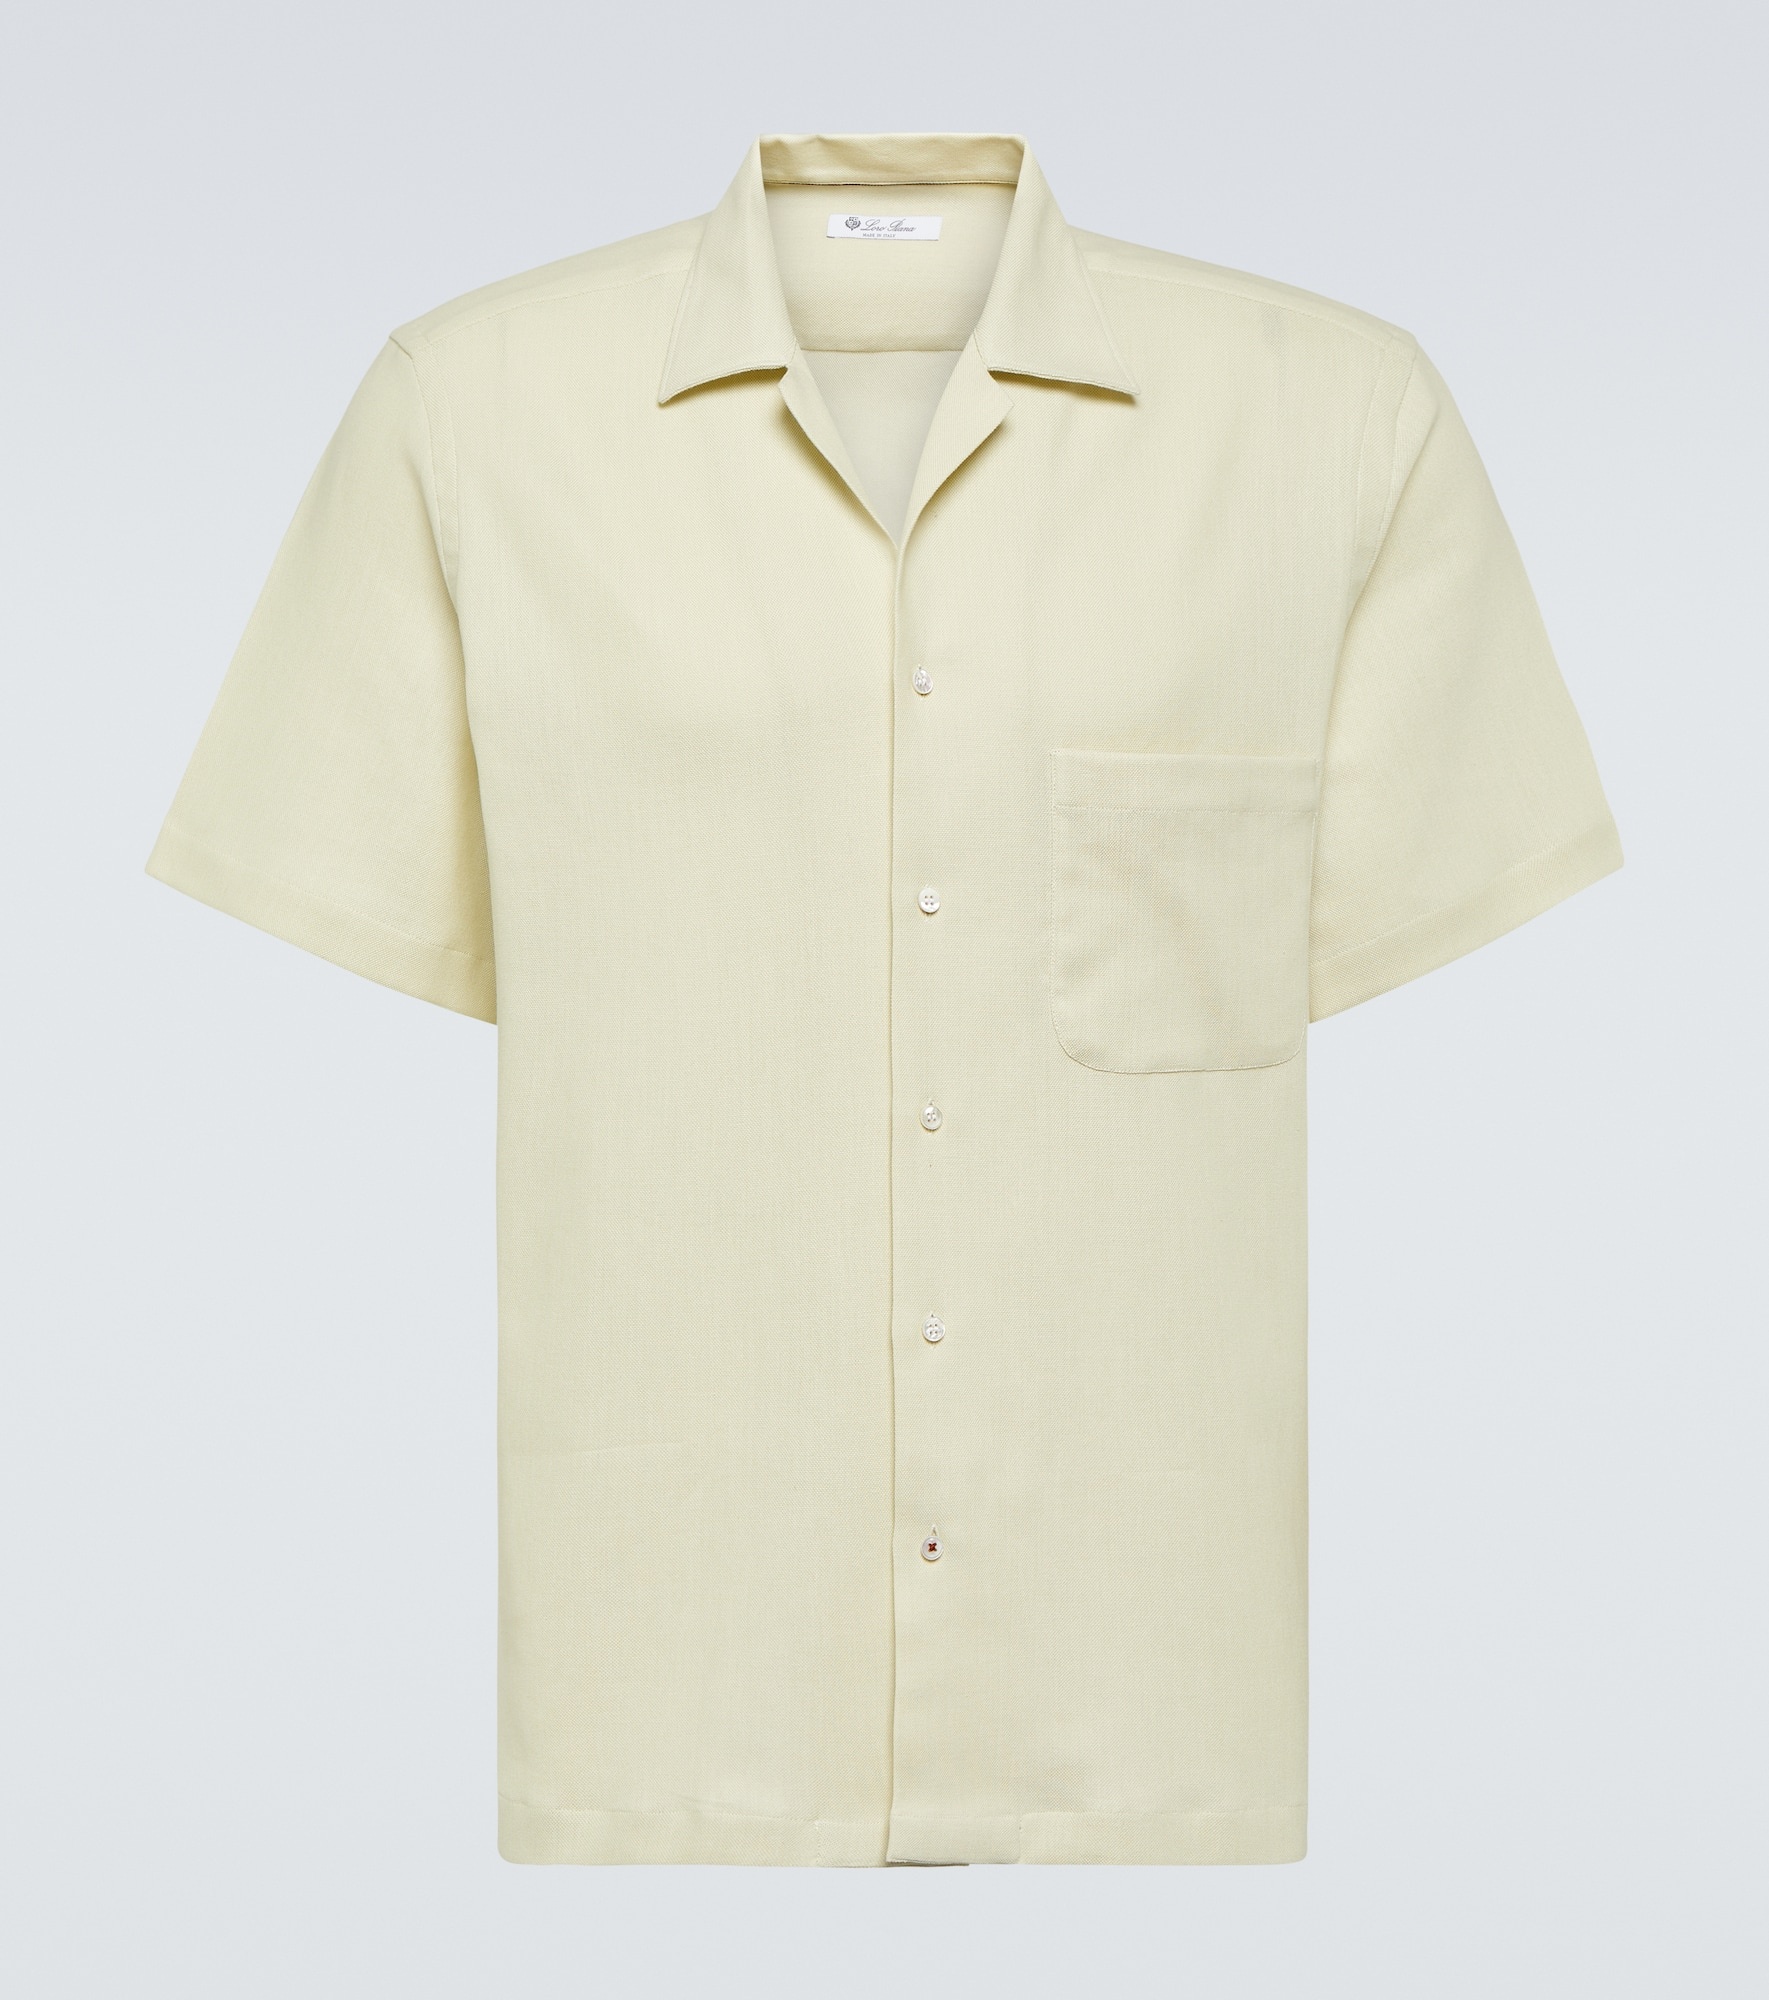 Tindaro cotton shirt - 1